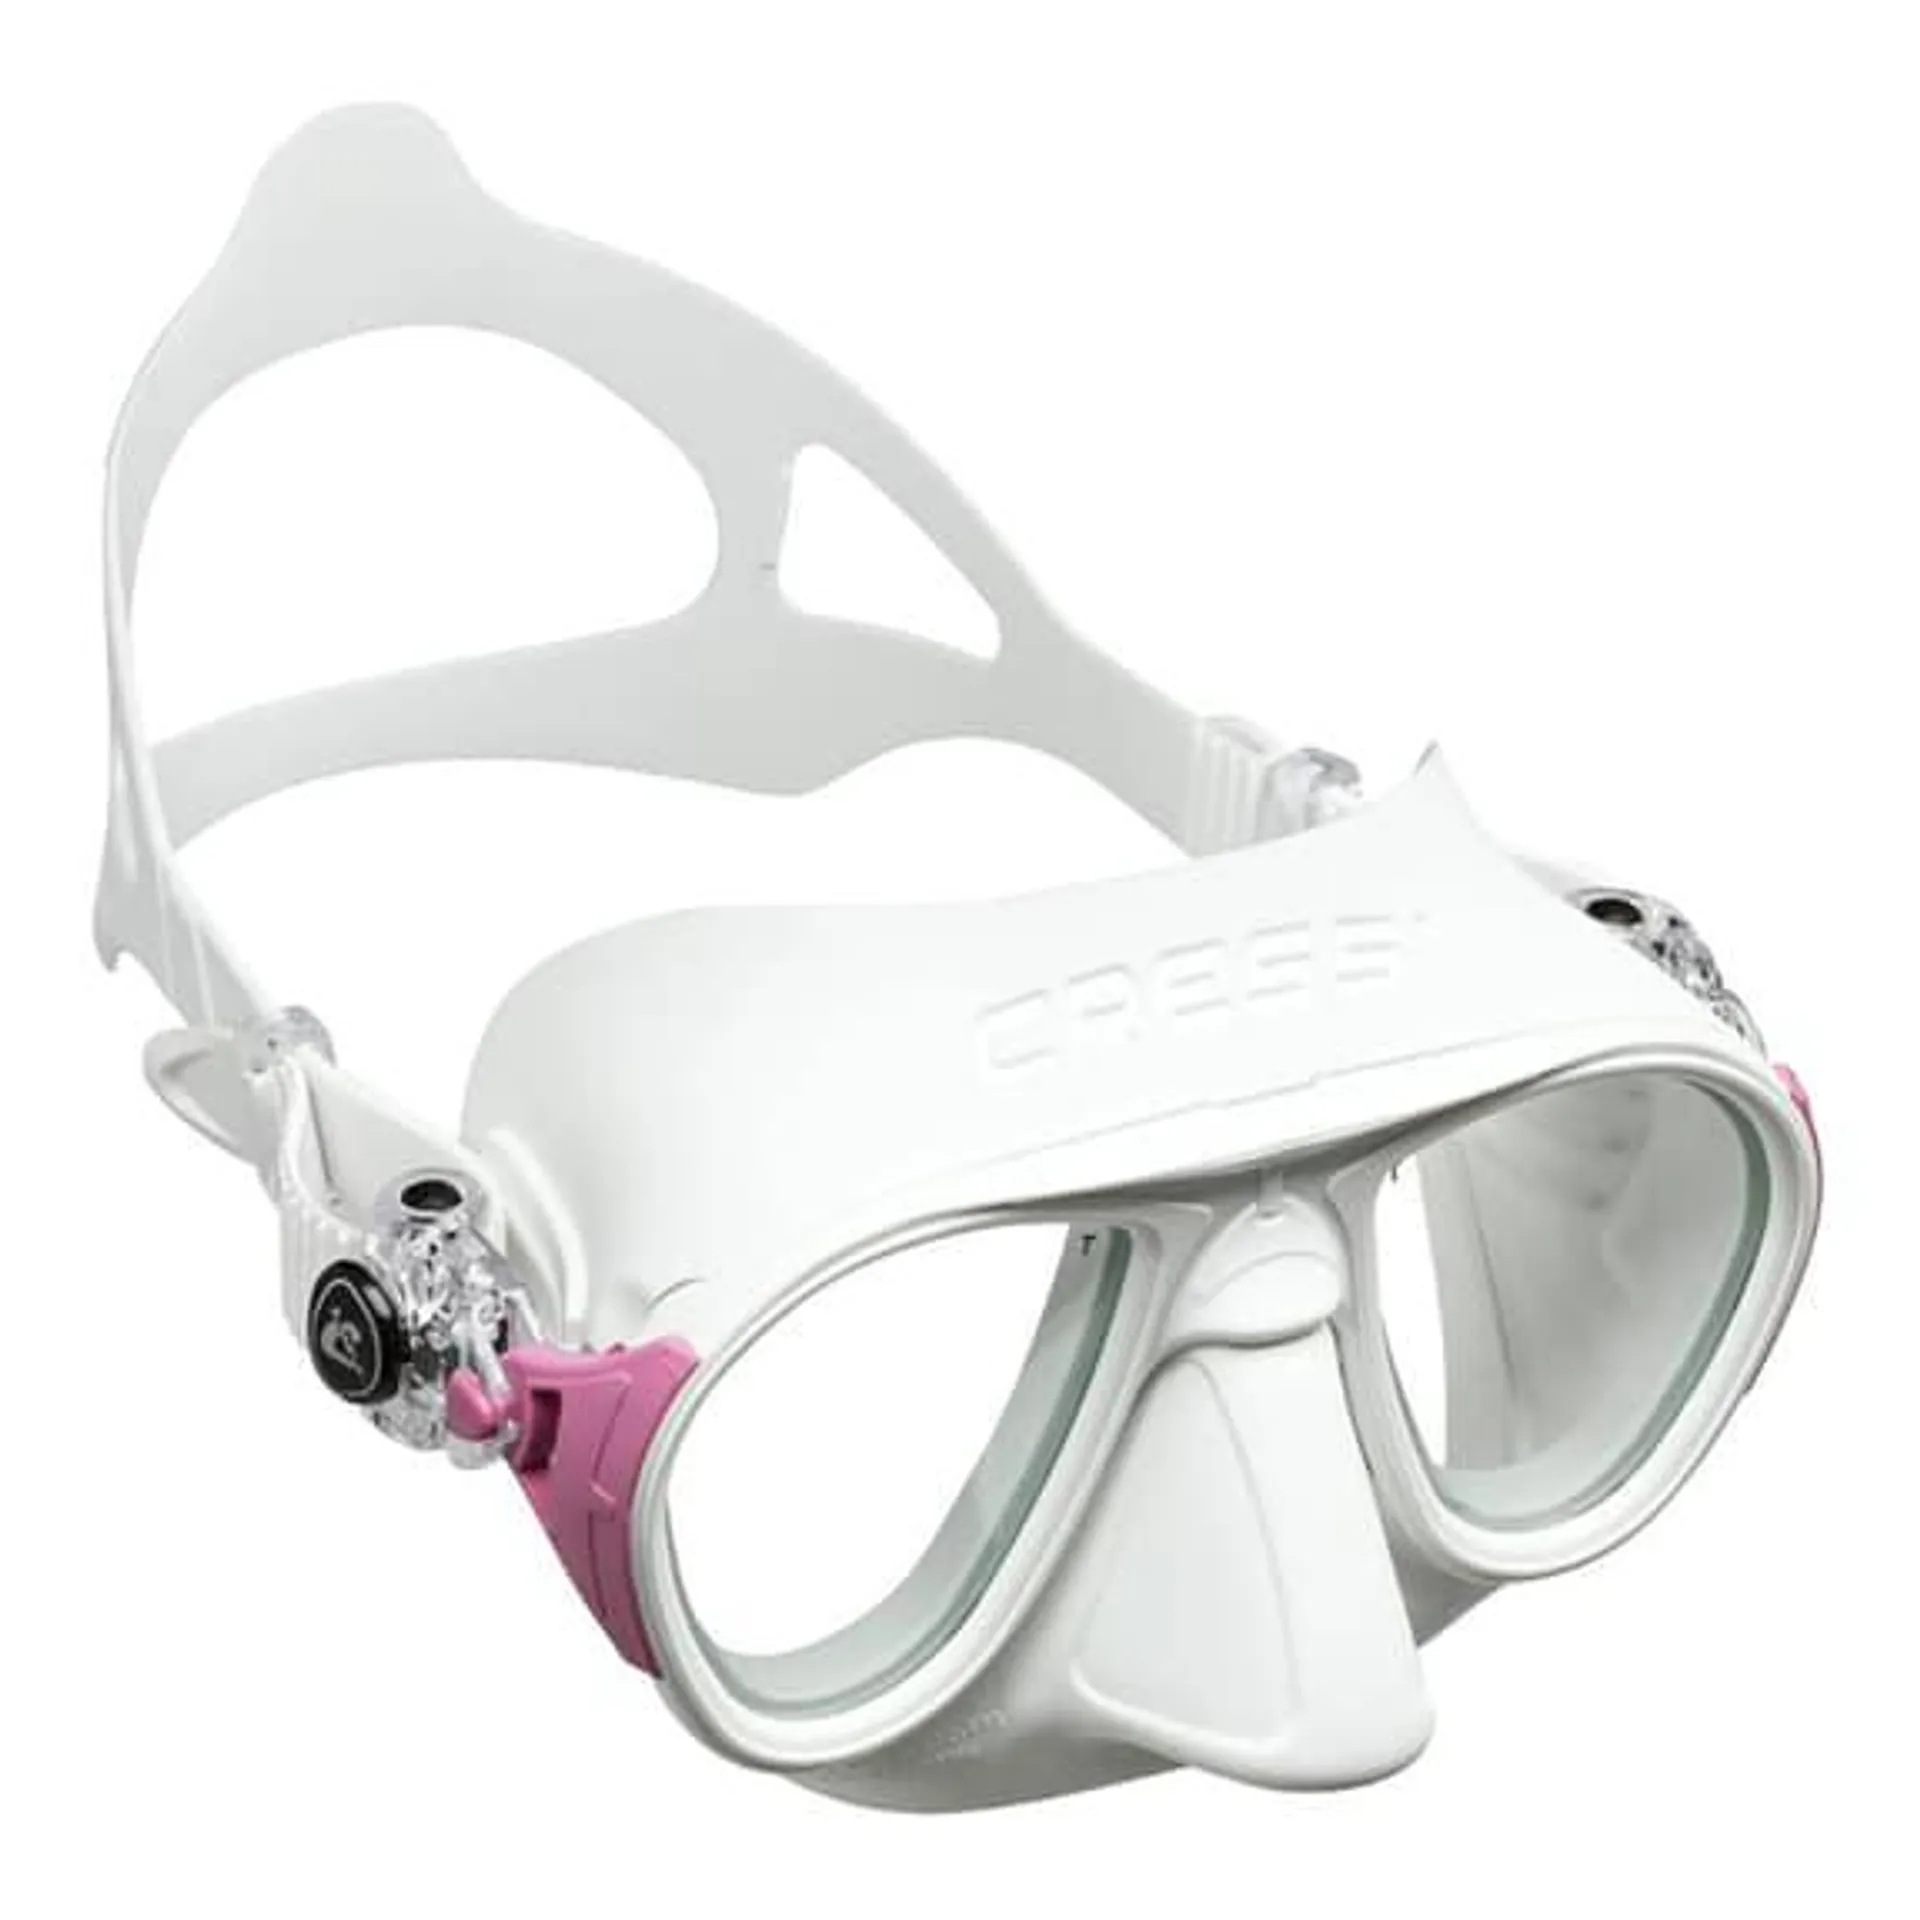 Masque de plongée Cressi Calibro blanc rose avec verres transparents